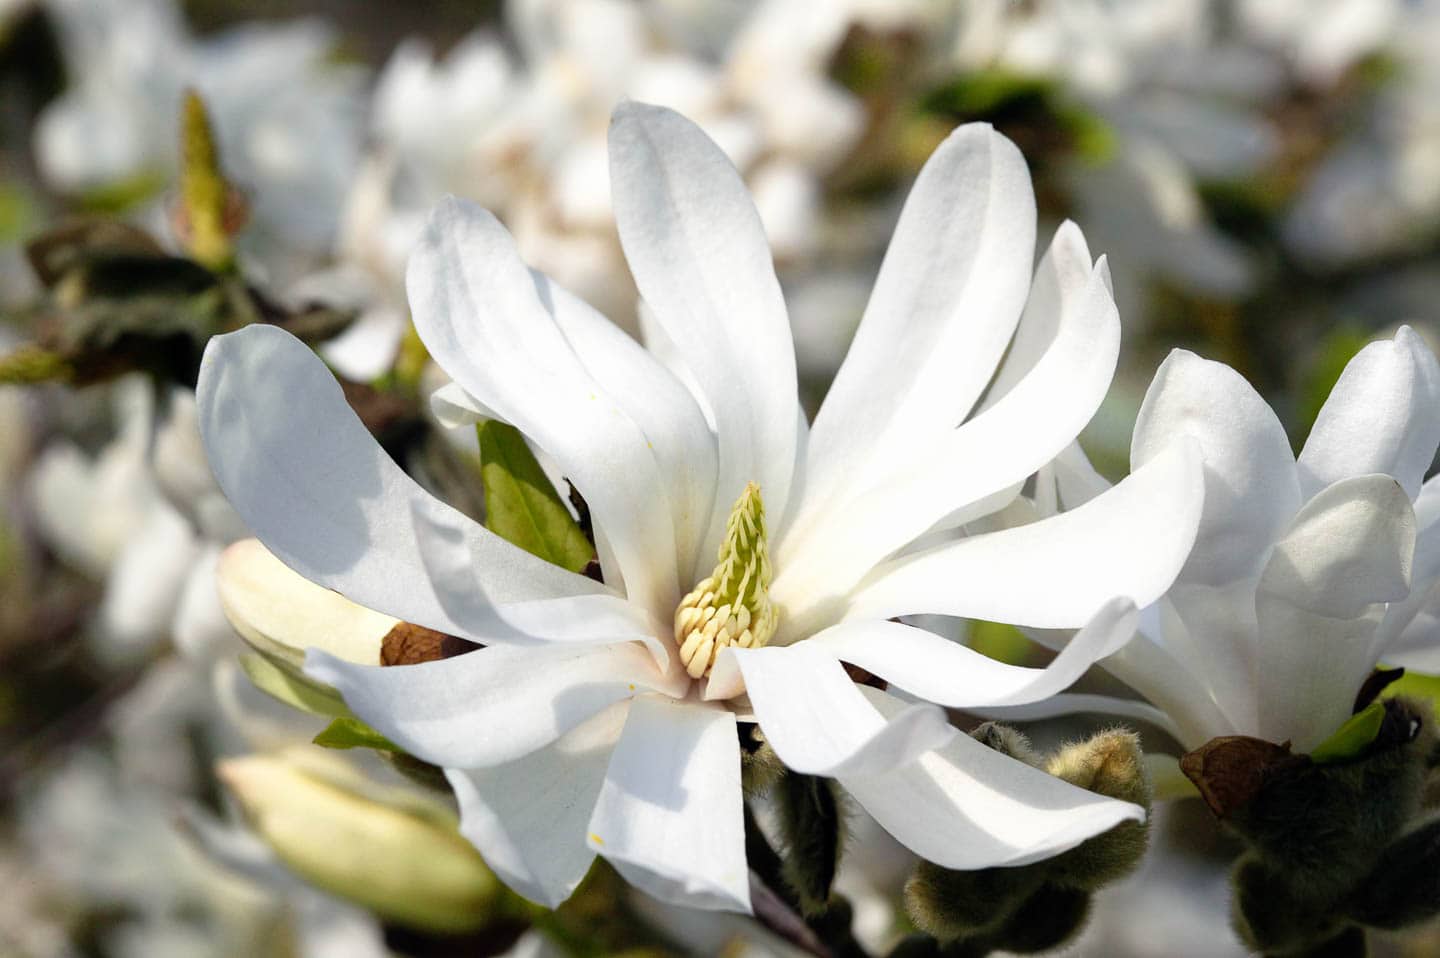 Star Magnolia flowers